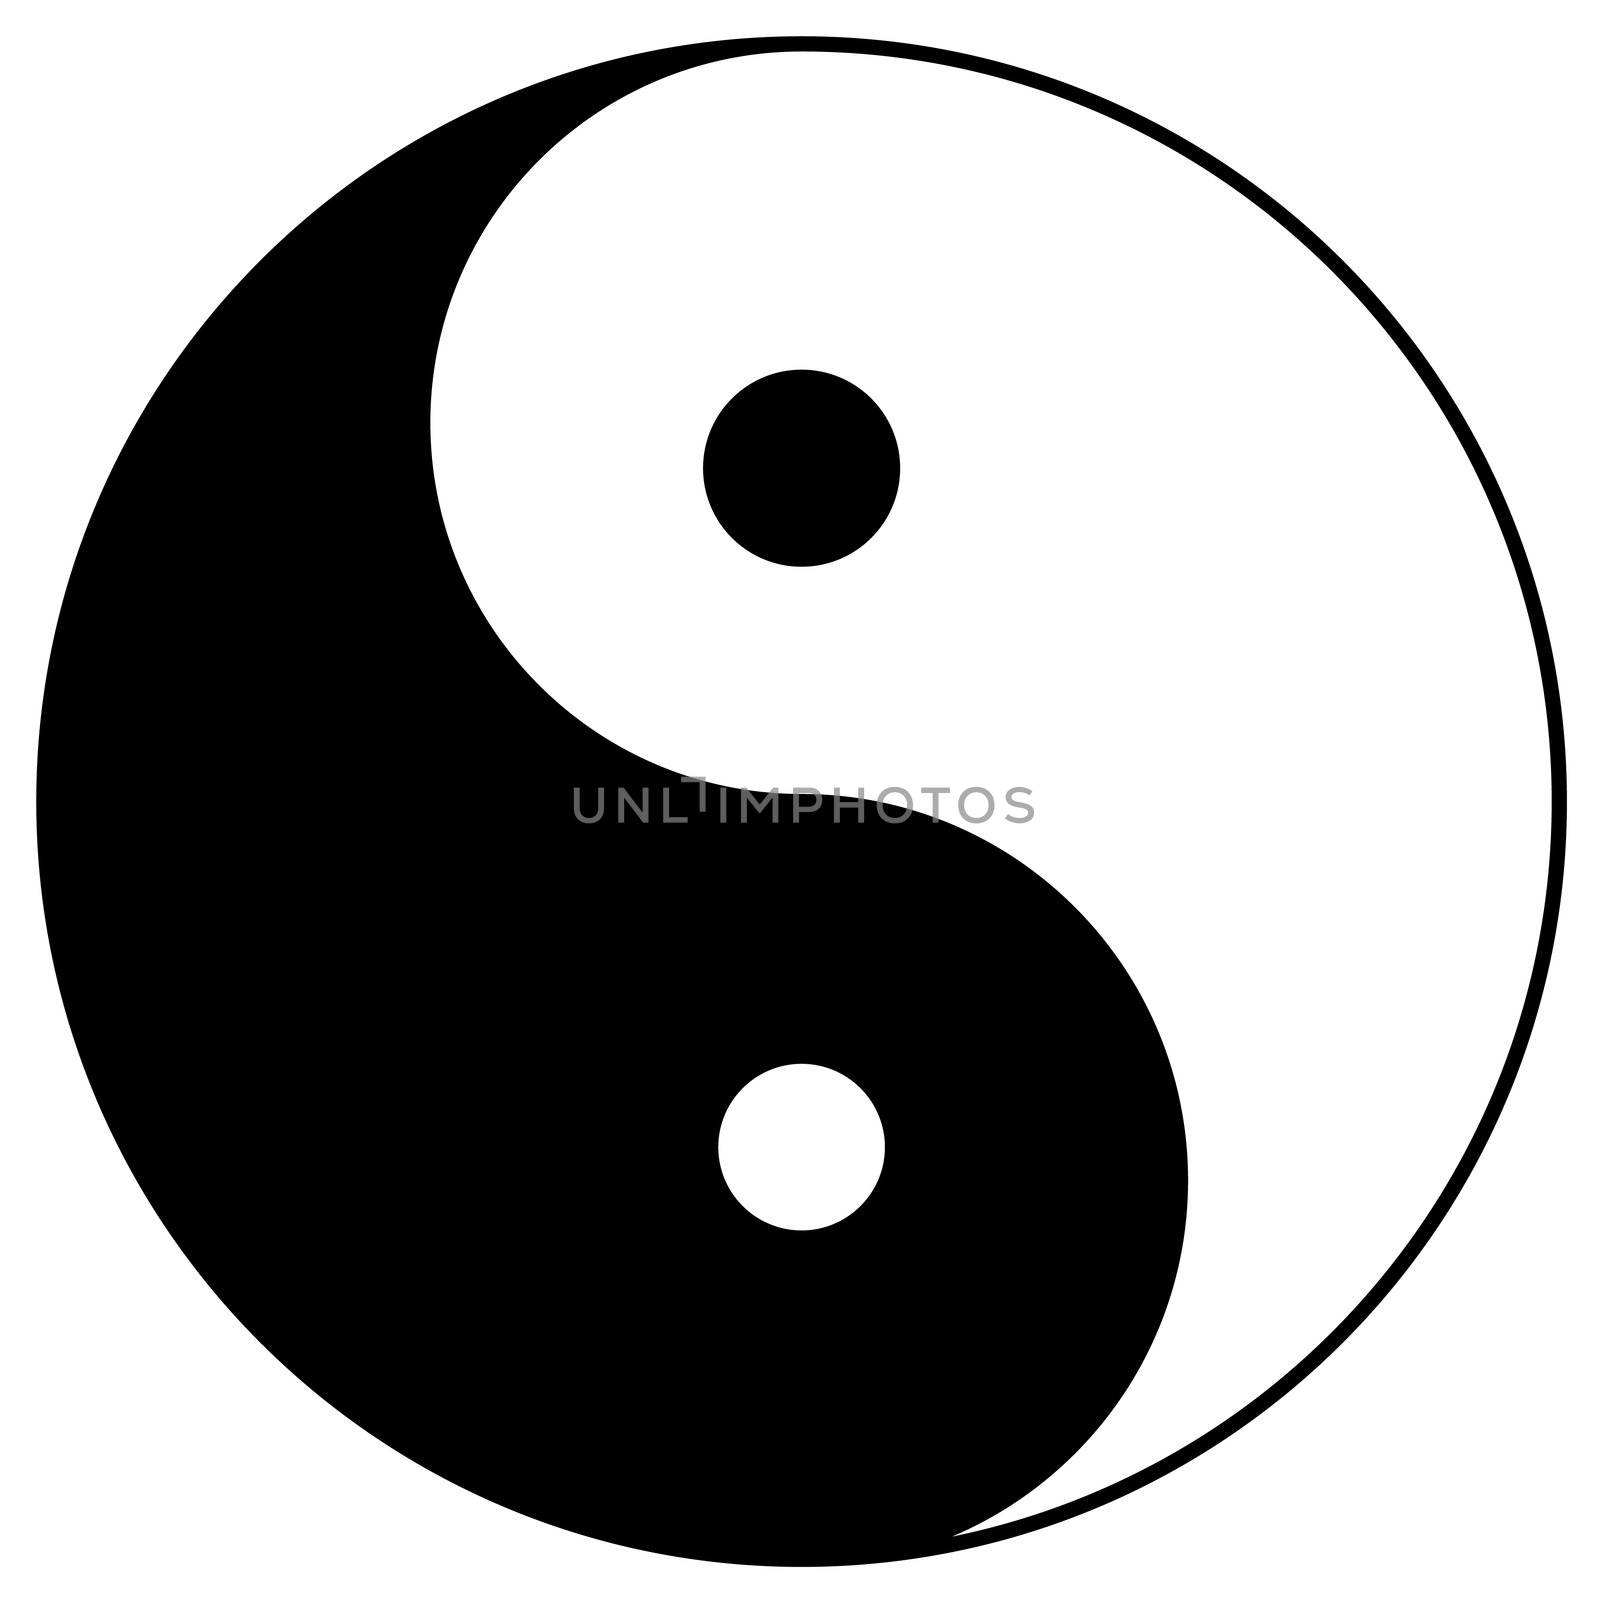 yin yang, taoistic symbol of harmony and balance